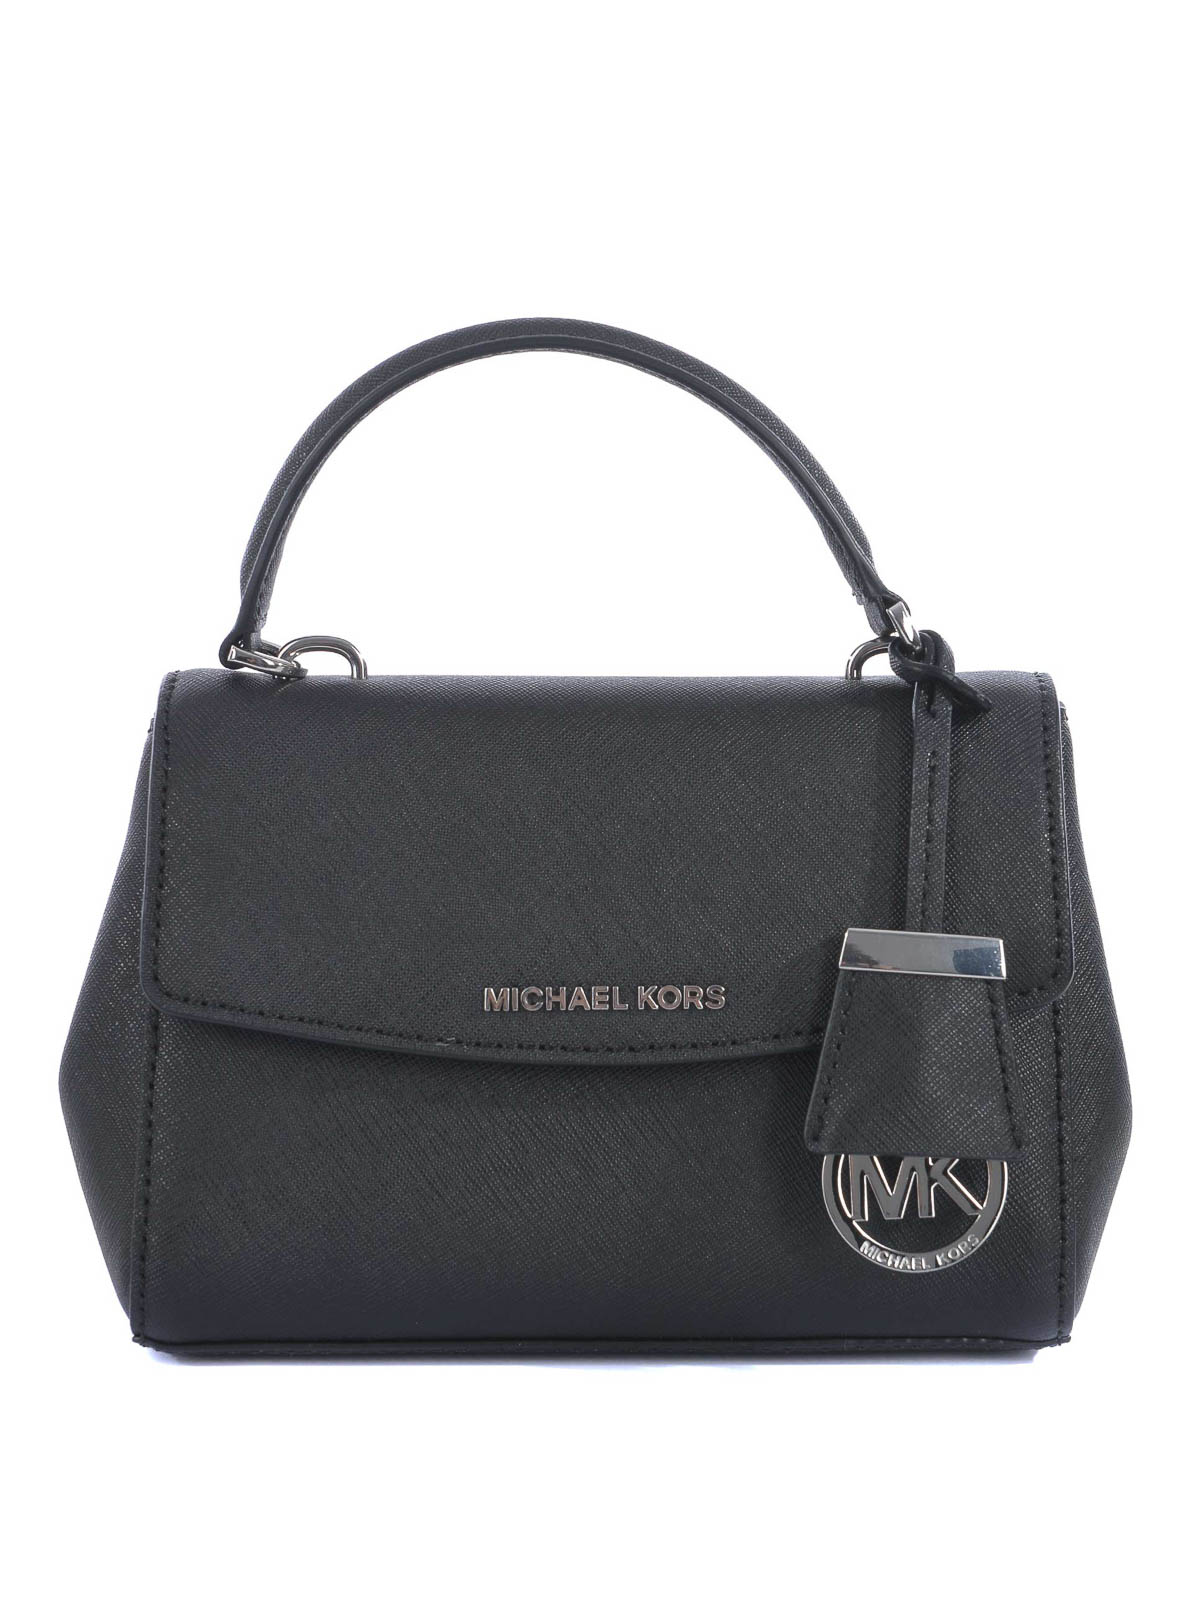 Michael Kors Ava Extra Small Saffiano Leather Satchel - Luggage